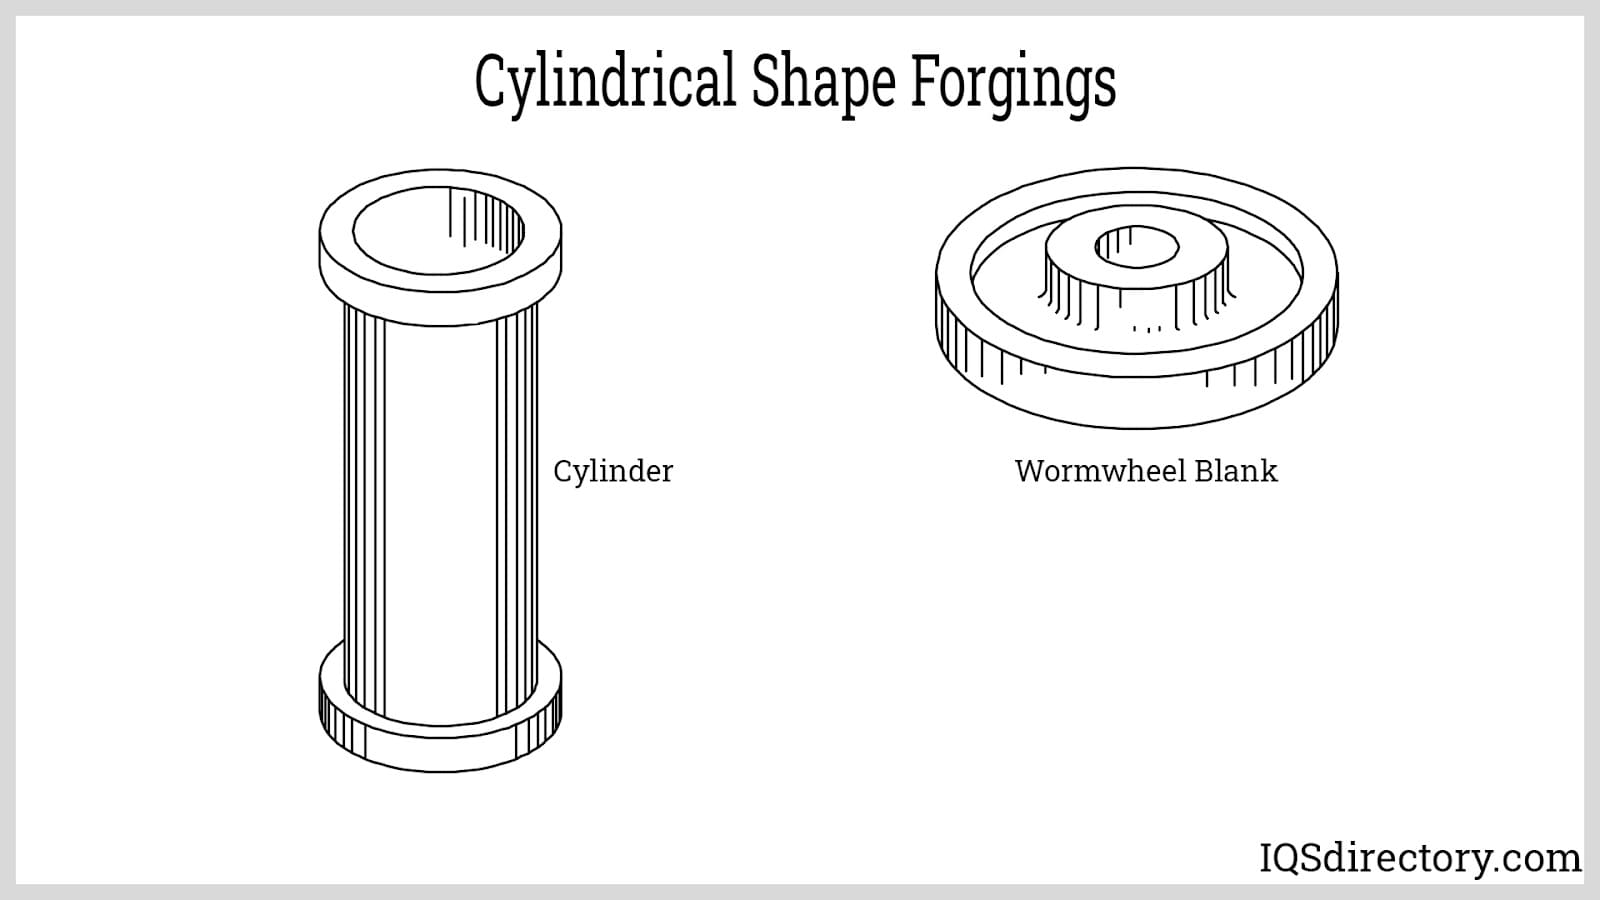  Cylindrical Shape Forgings